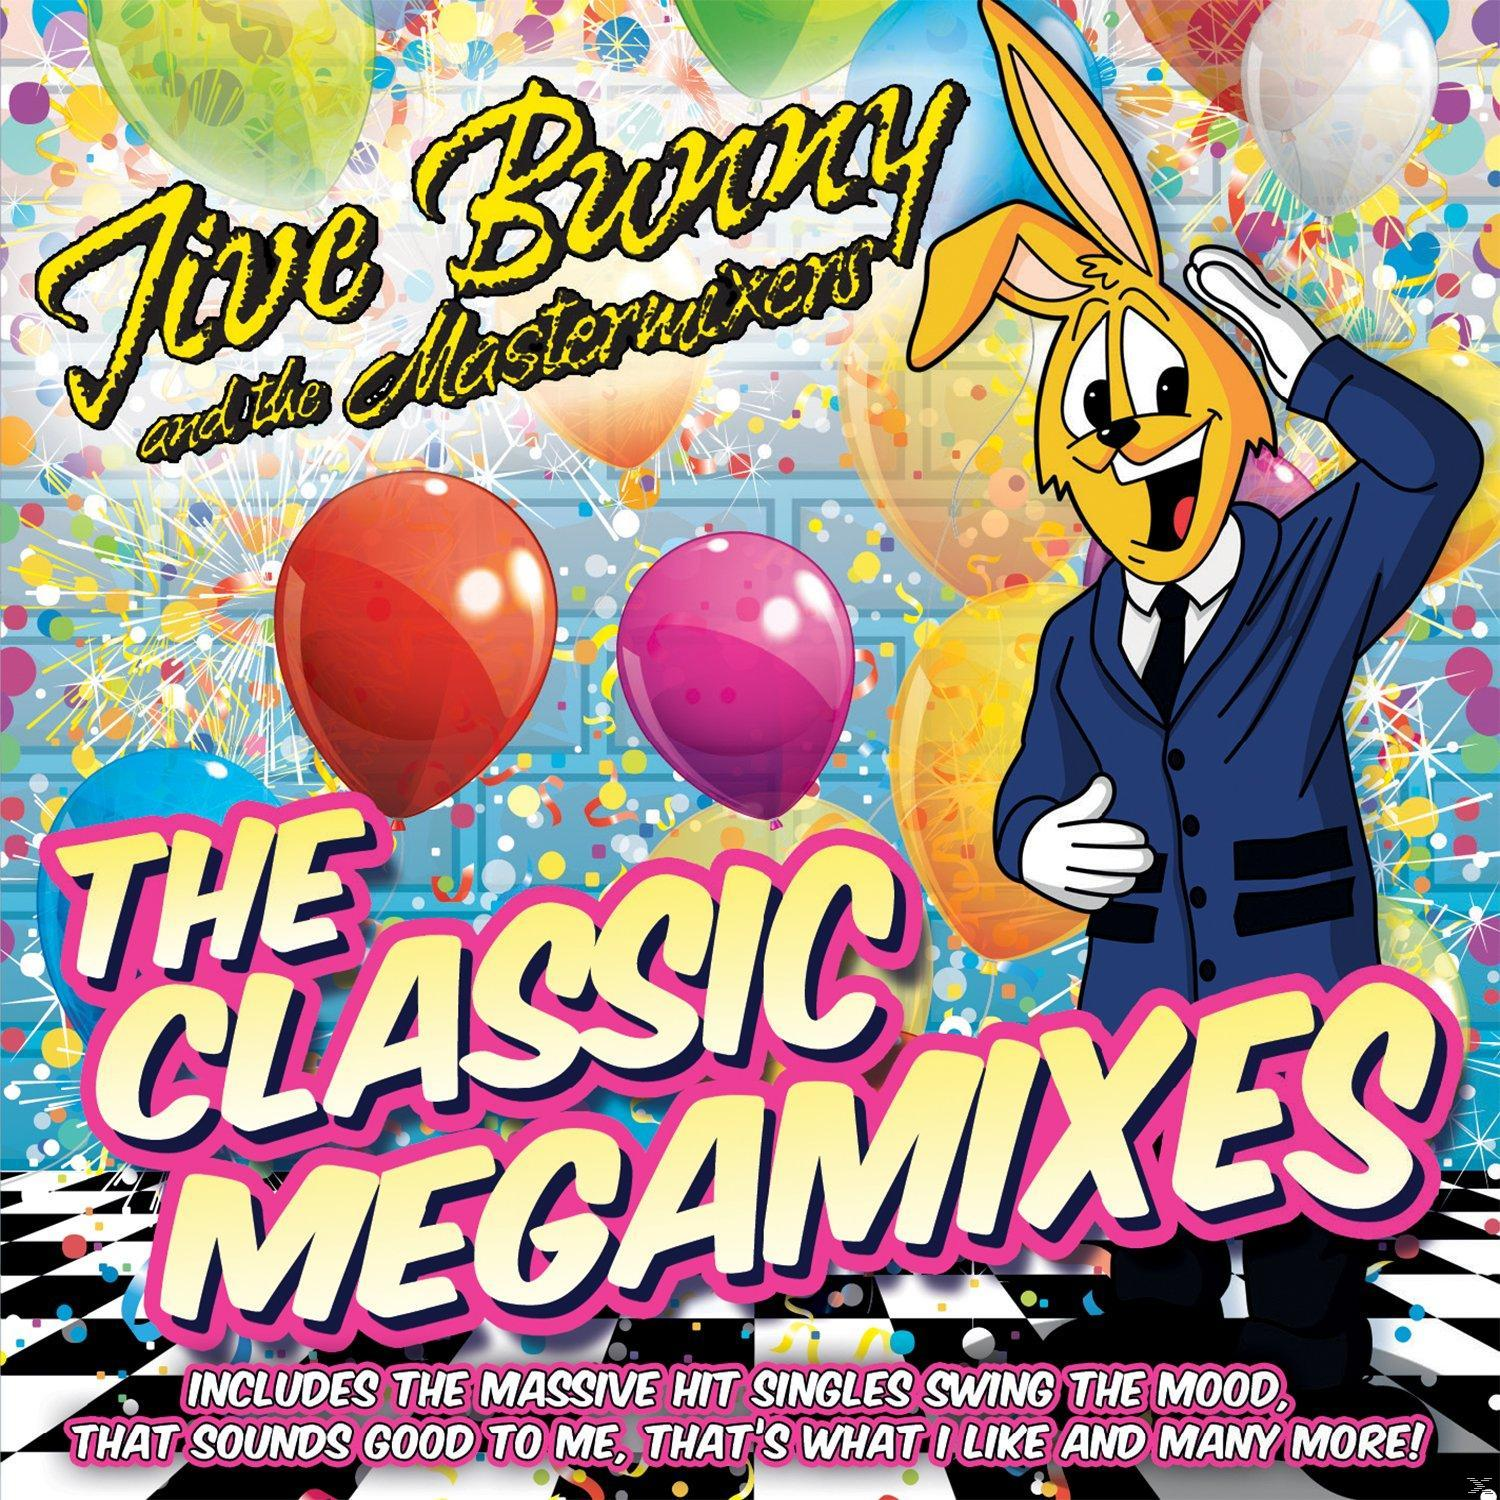 Jive The - Classic Bunny & Mastermixers The Megamixes (CD) -